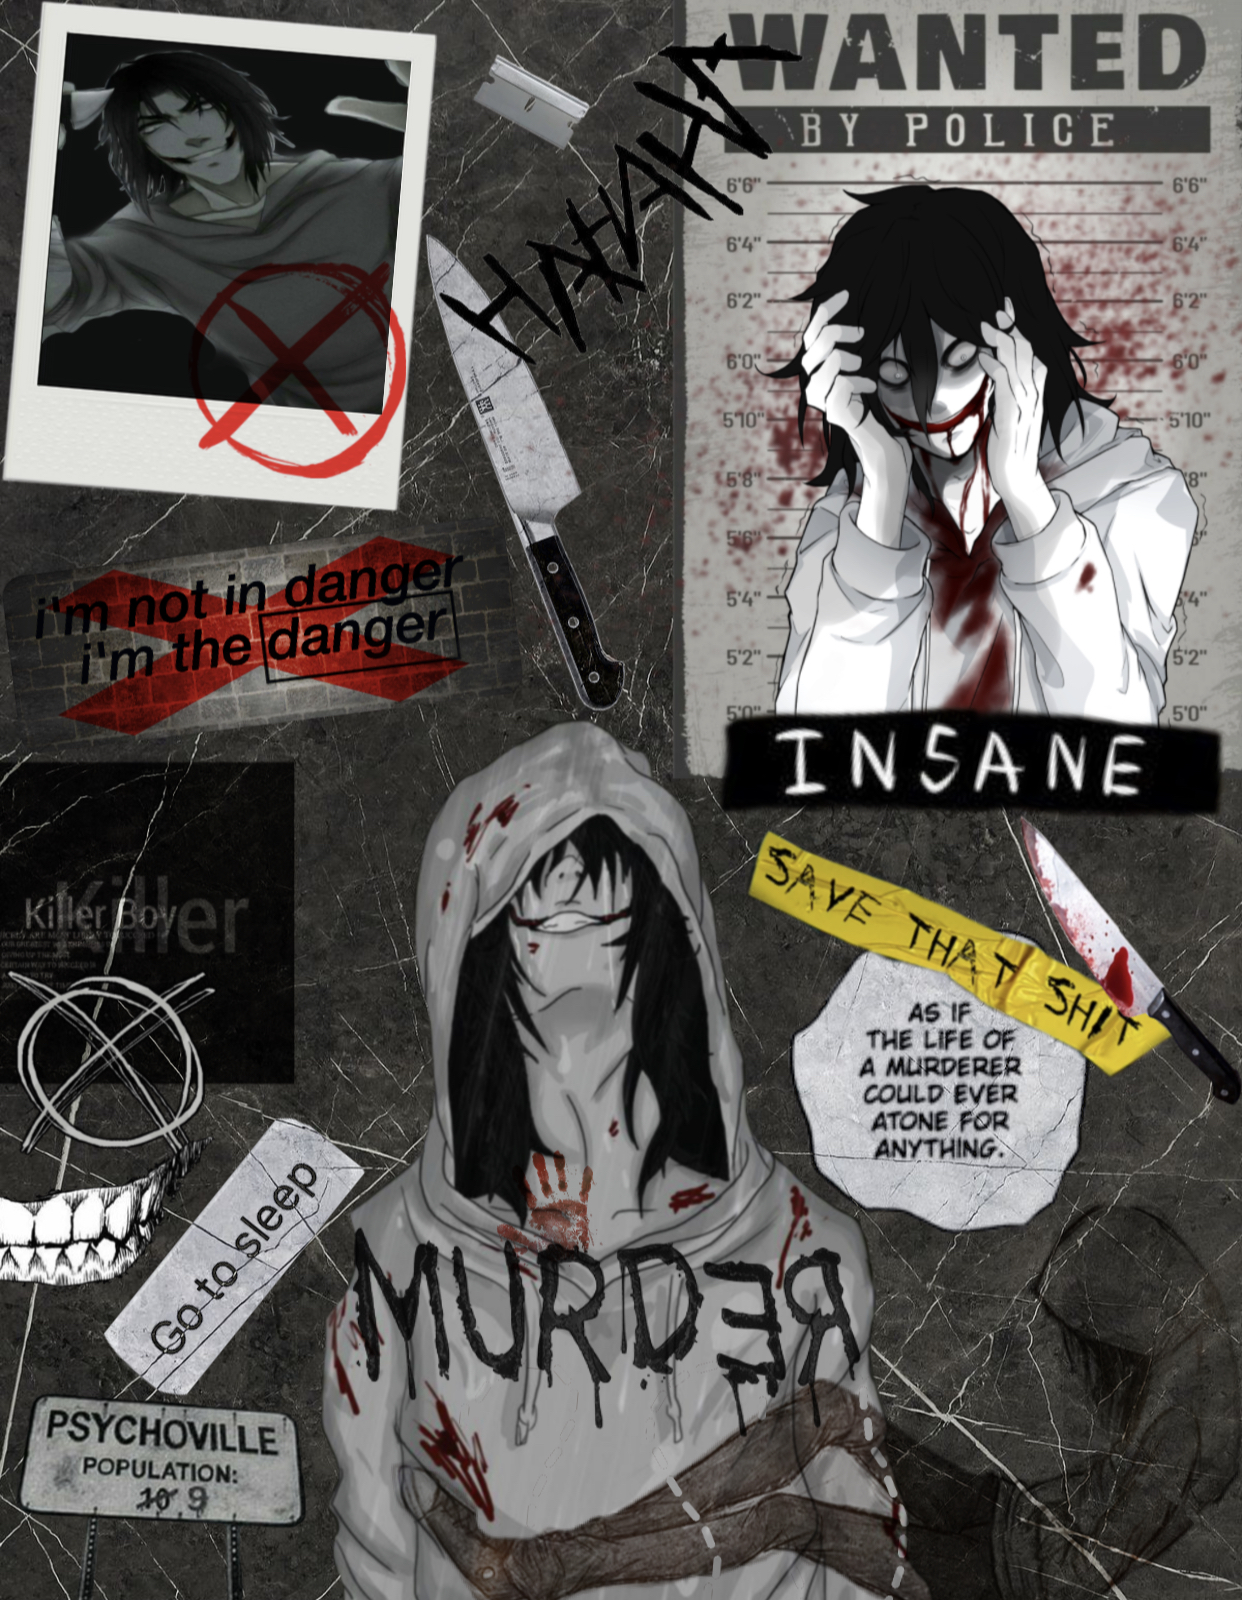 Jeff The Killer - Creepypasta Poster for Sale by AshsWhiz